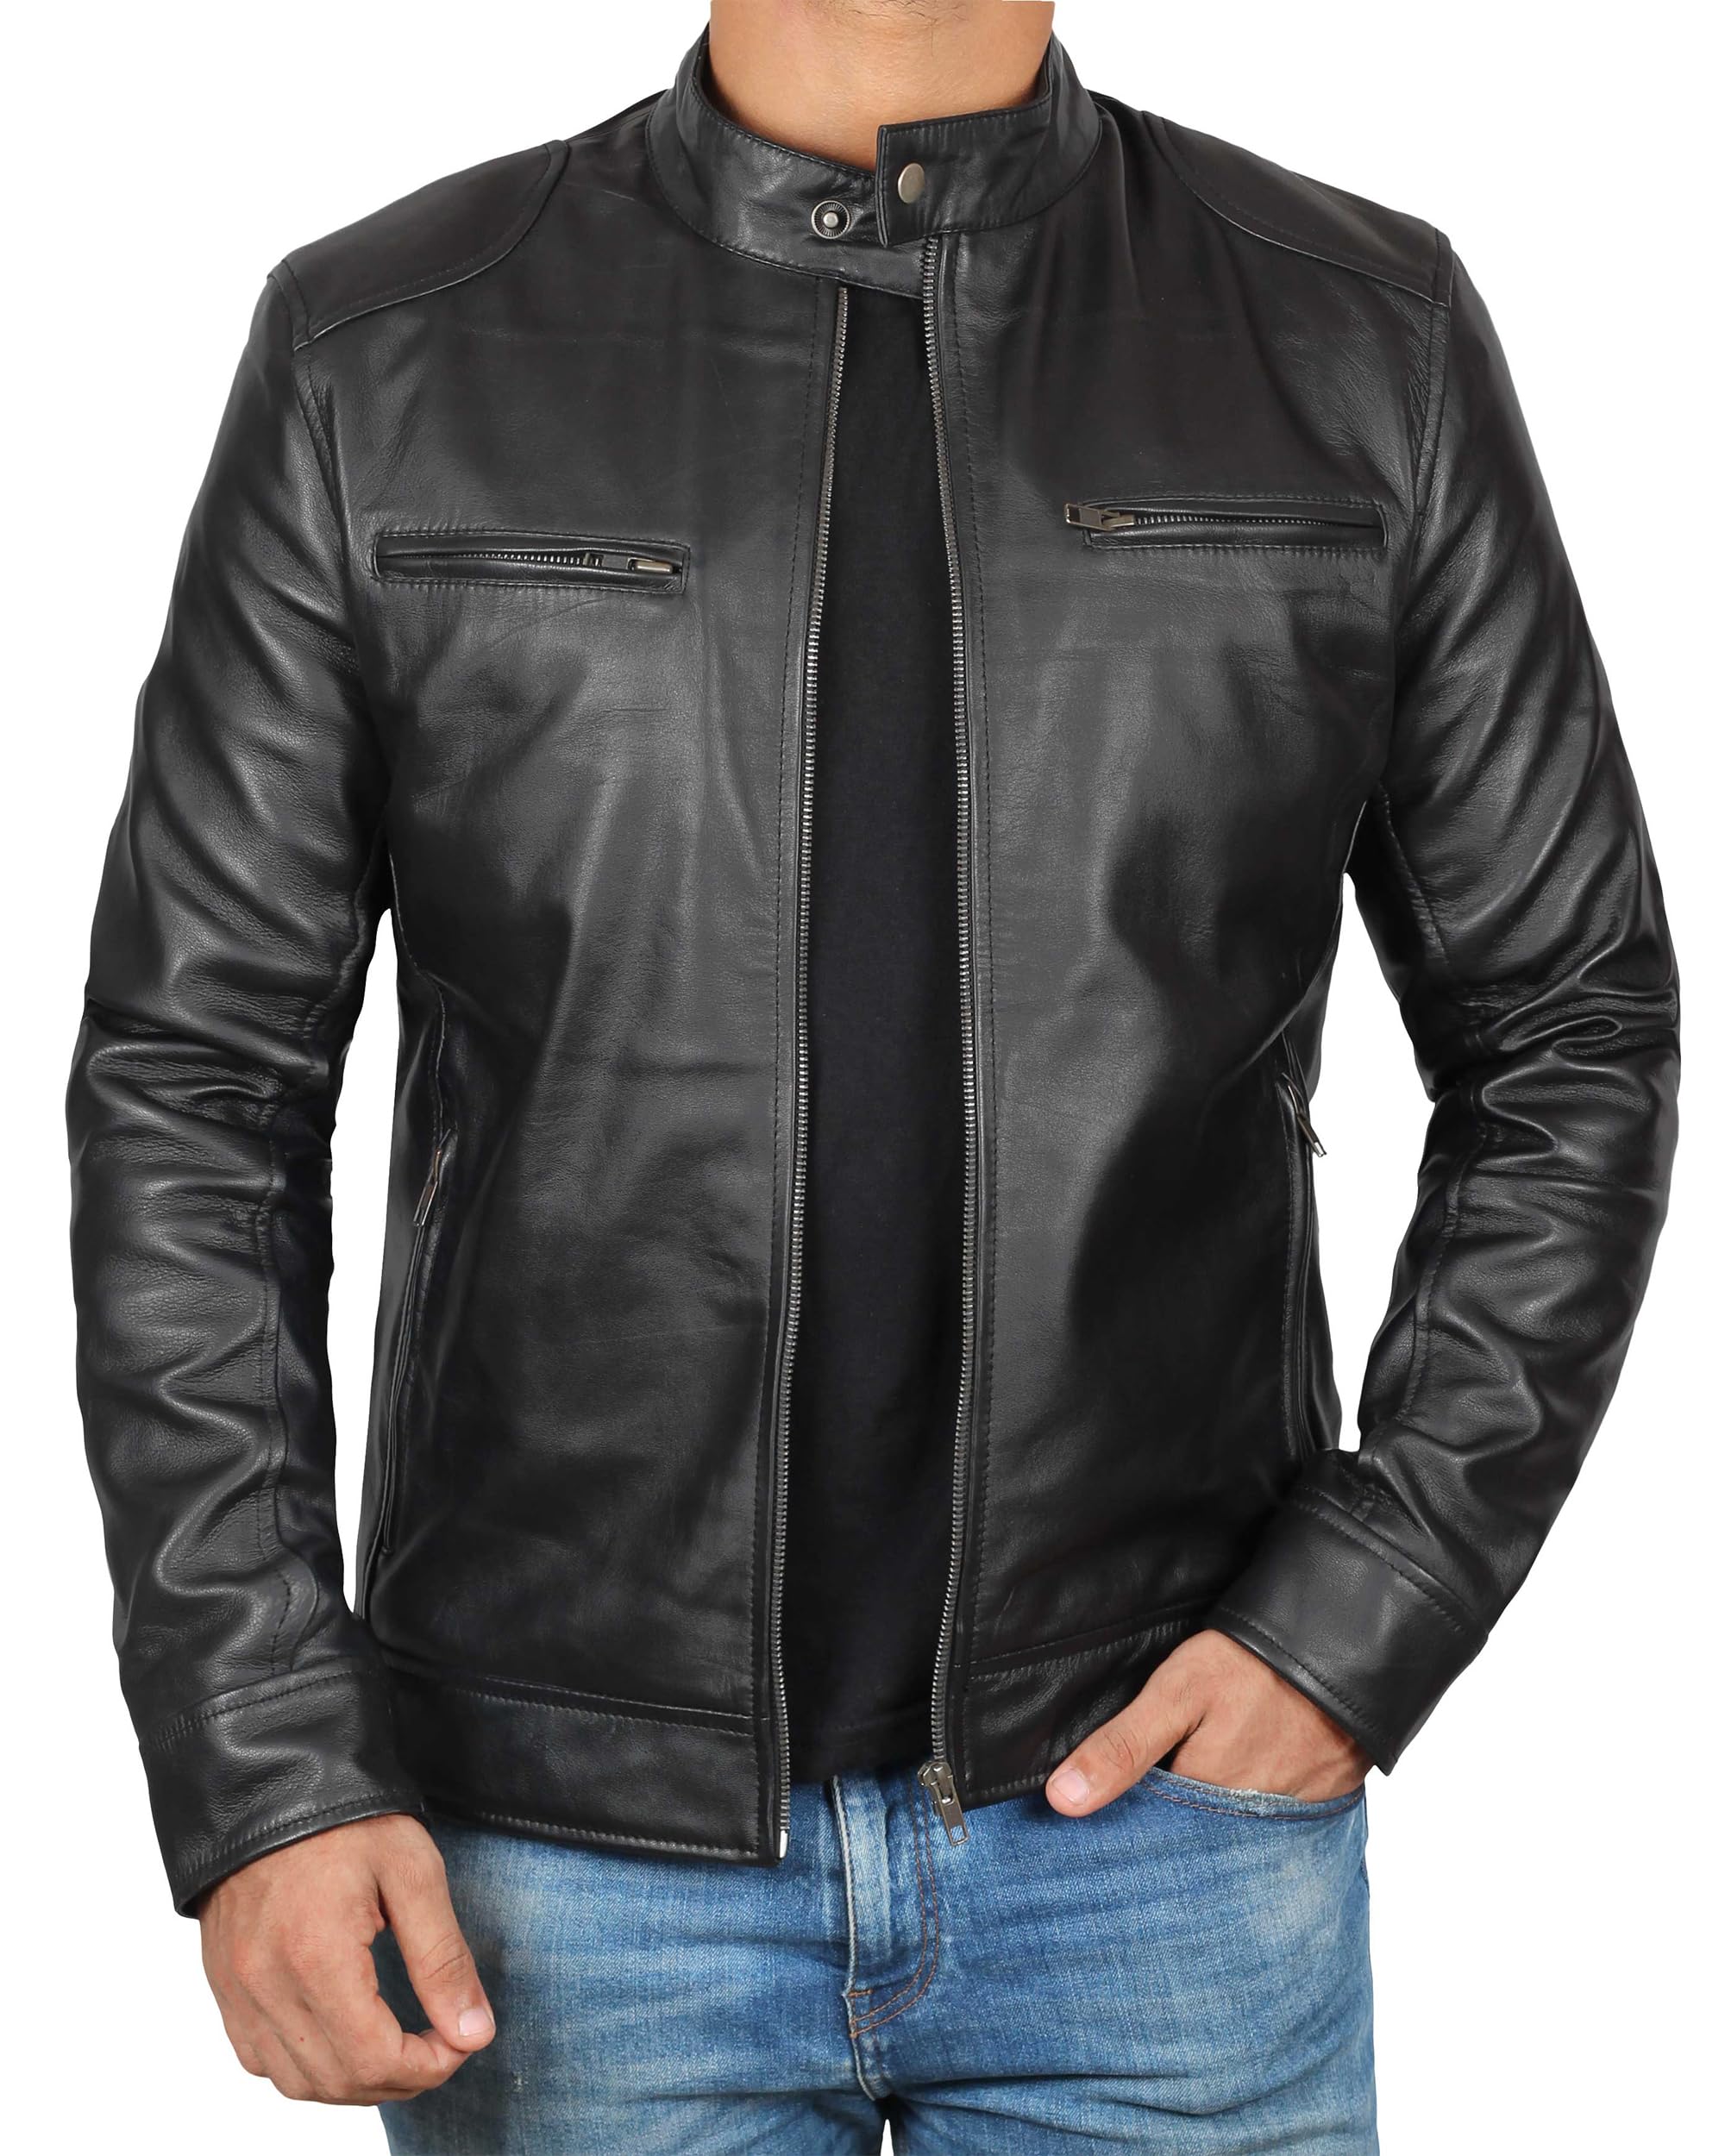 Decrum Mens Leather Jacket - Cafe Racer Style Real Lambskin Leather Jacket Men